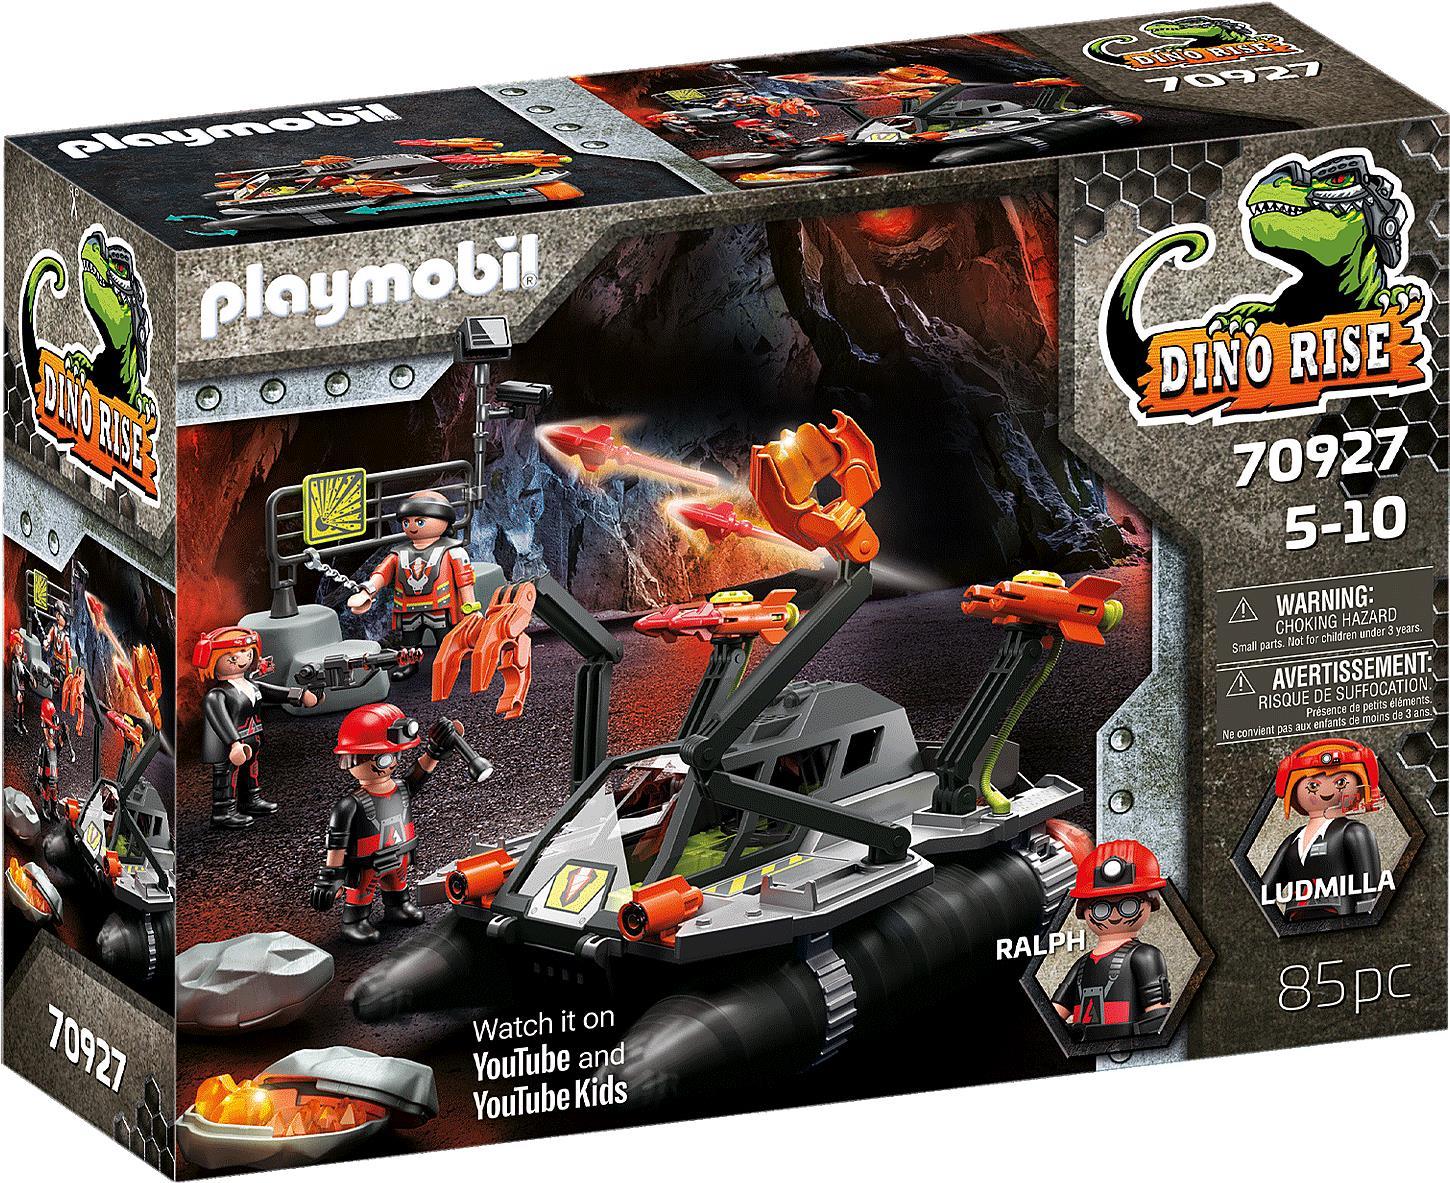 Playmobil ® Dino Rise Comet Corp. Abbruchbohrer 70927 (70927)